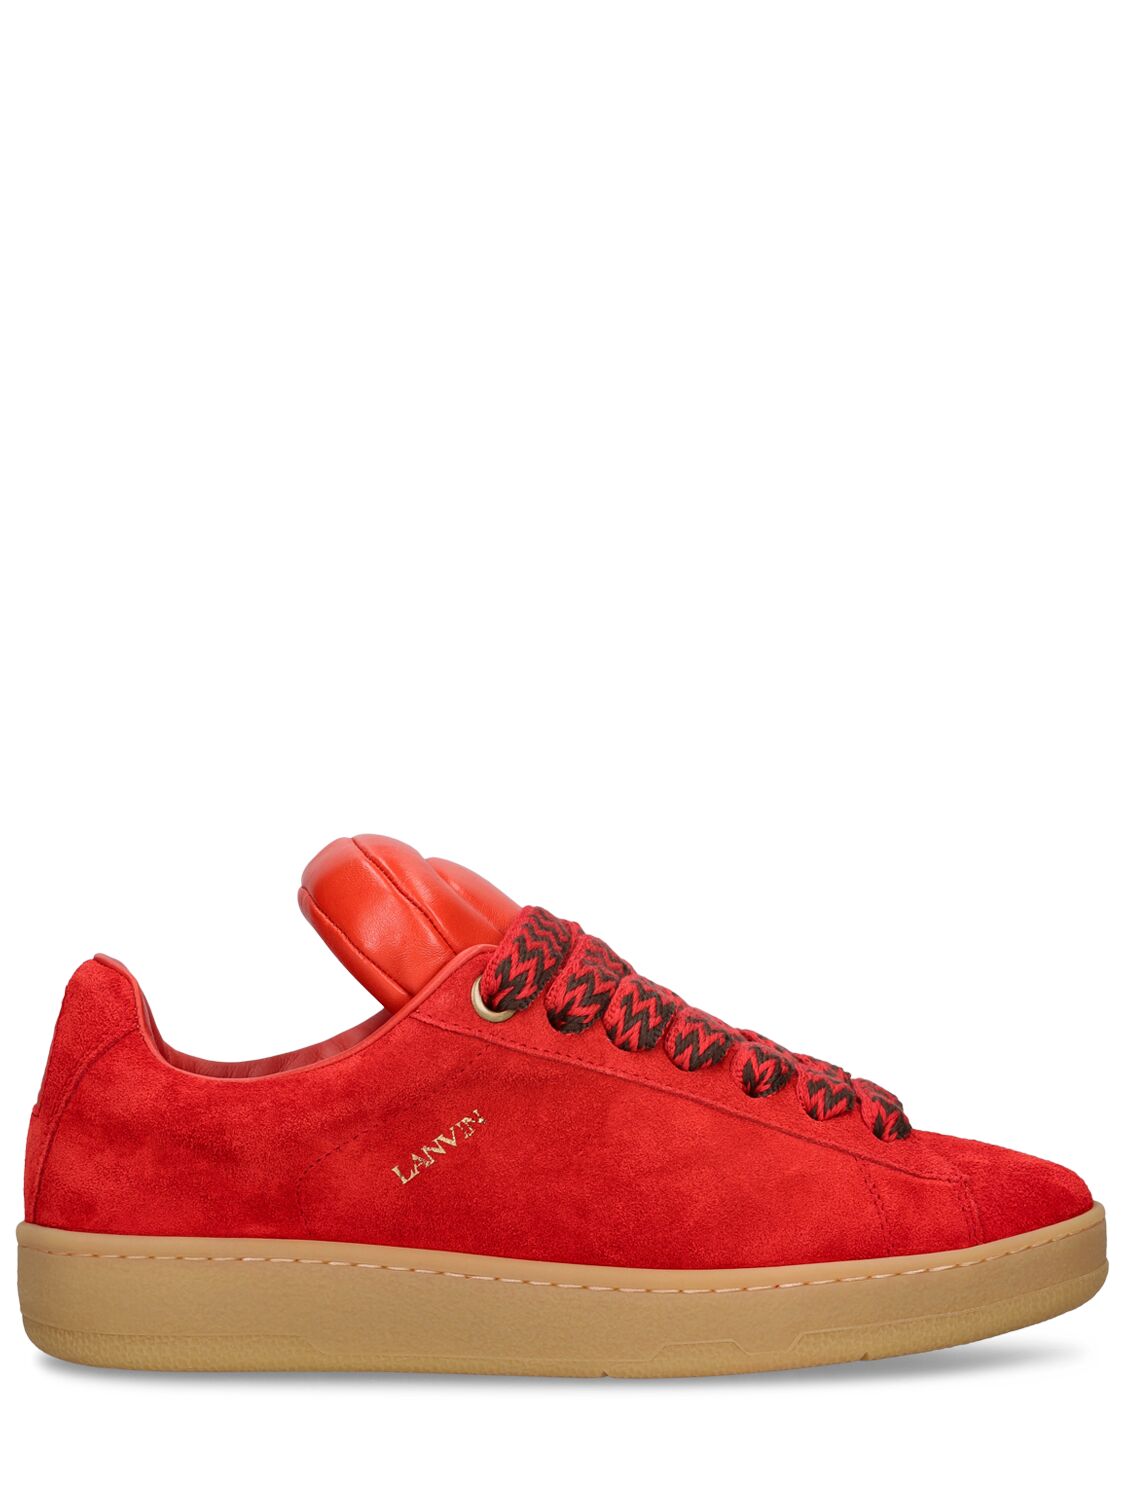 Lanvin Curb Lite Sneakers In Poppy Red,orange